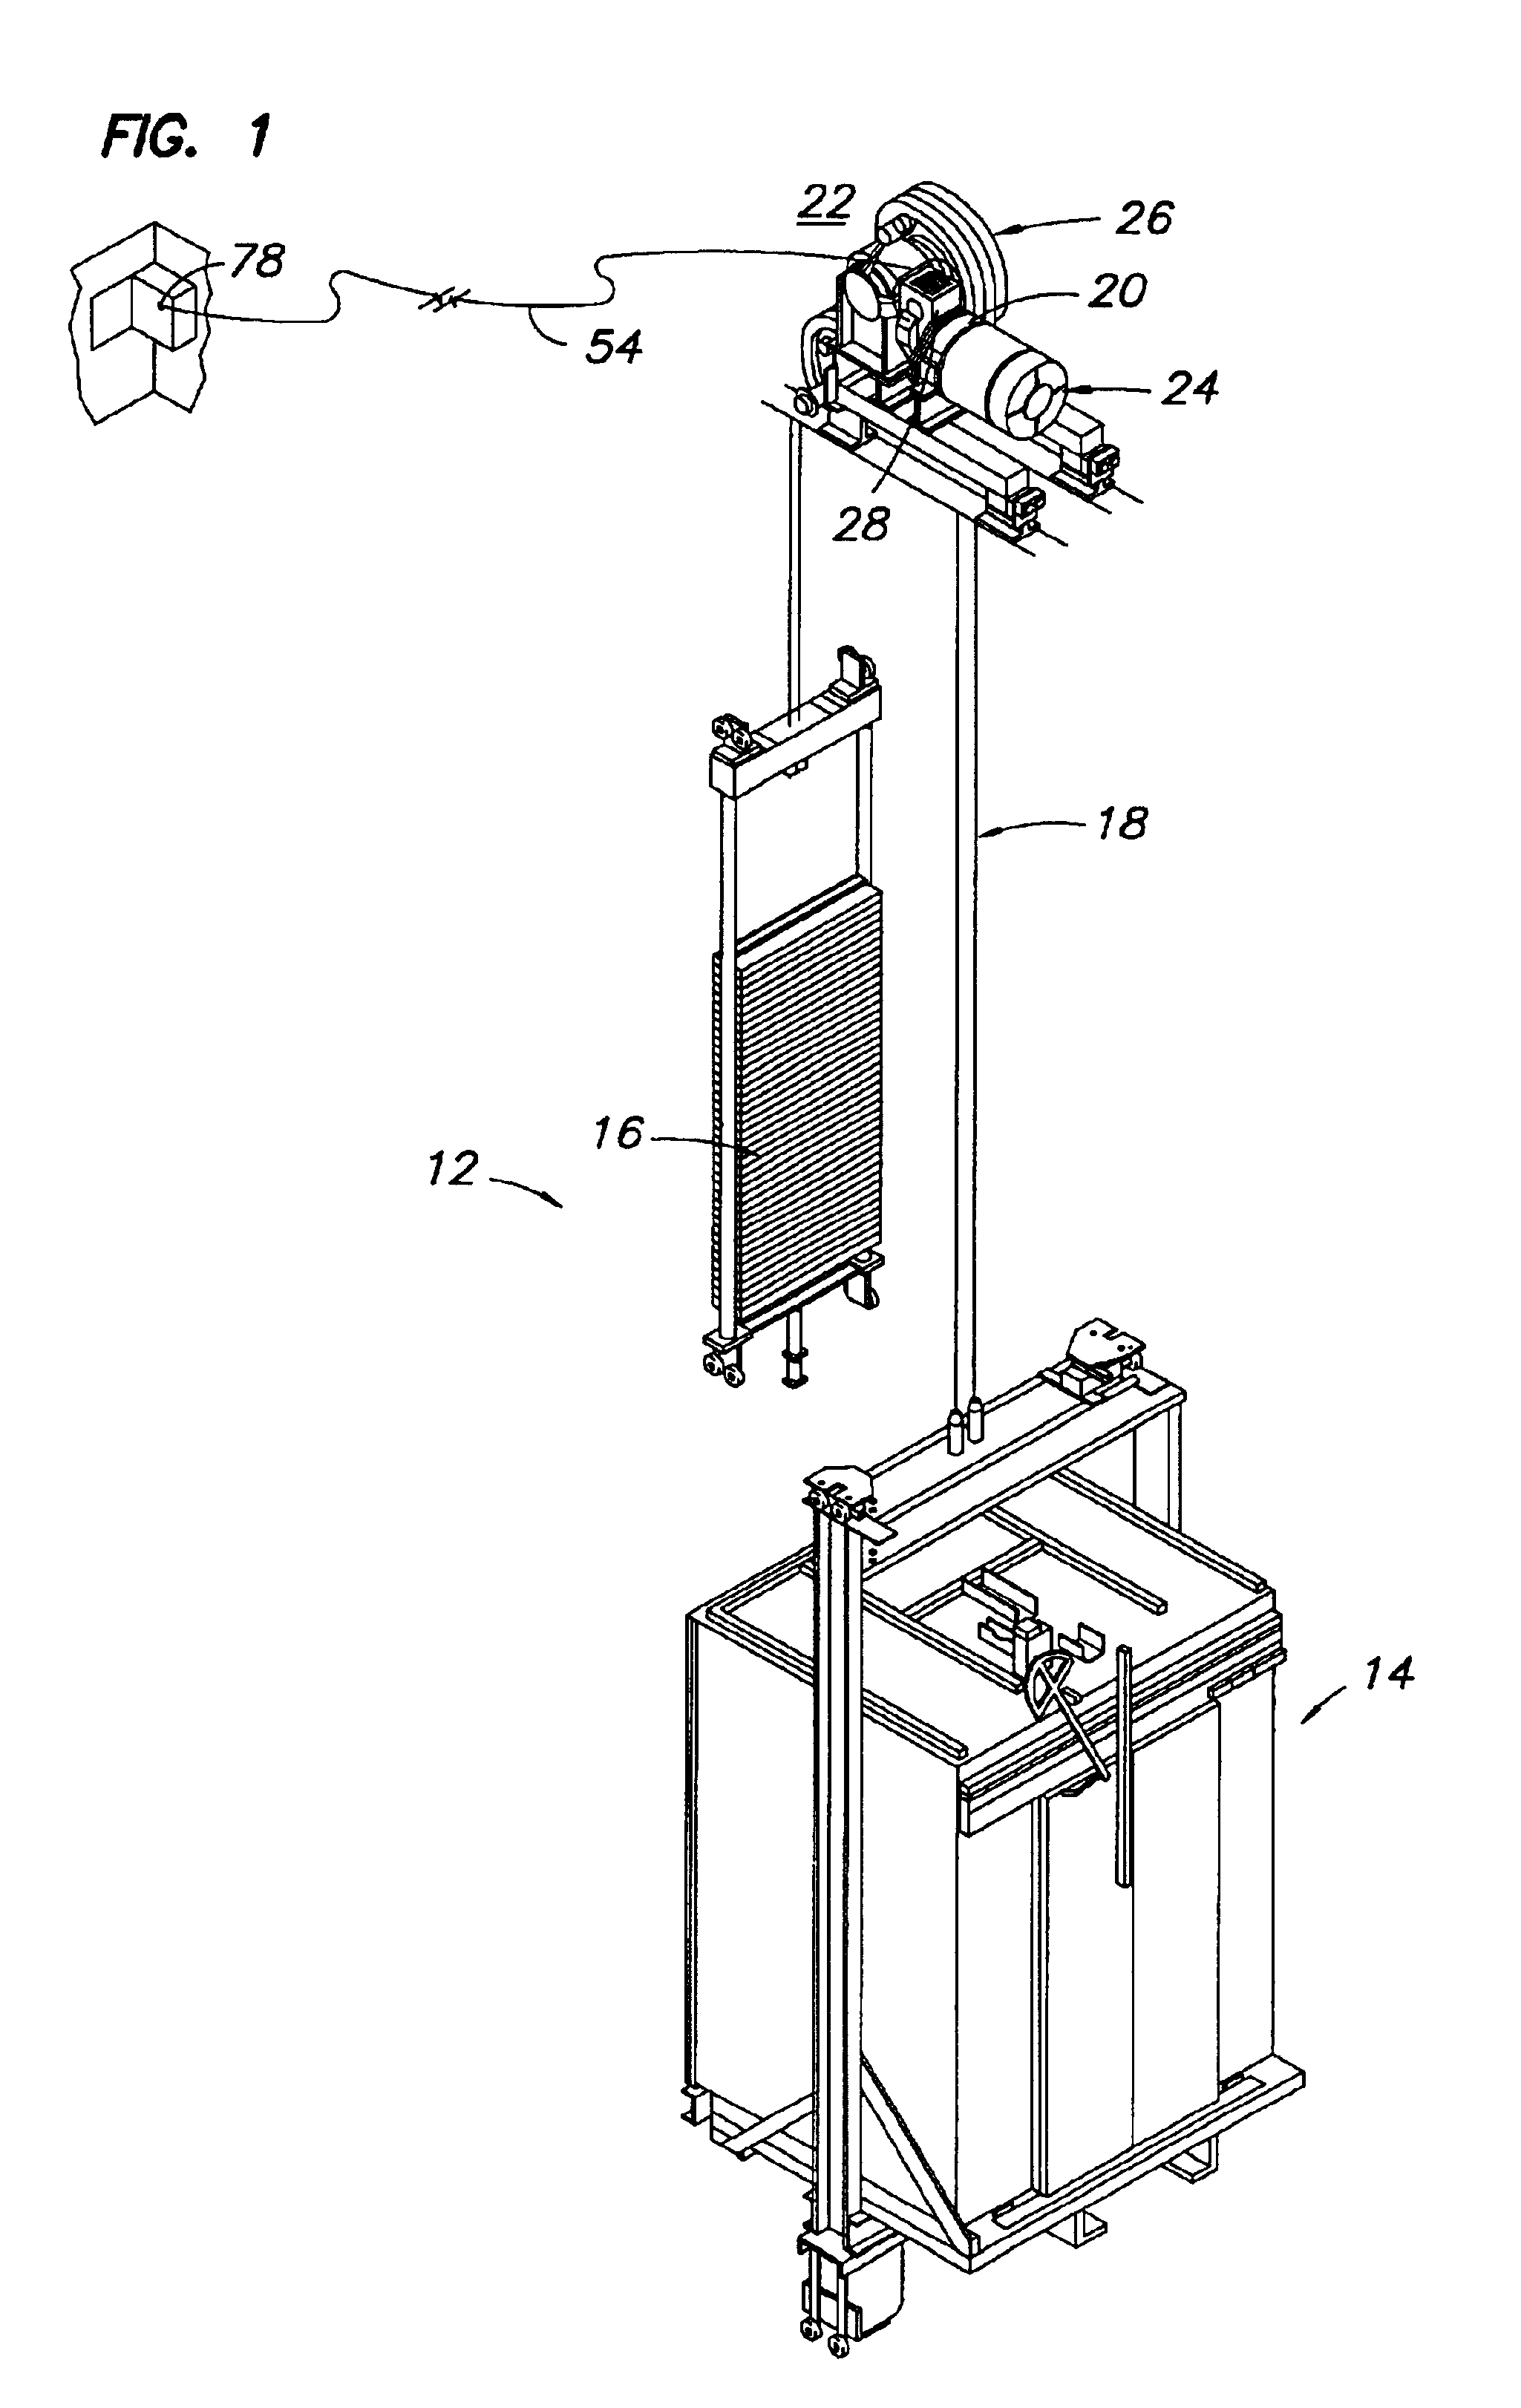 Remote brake release mechanism for an elevator machine